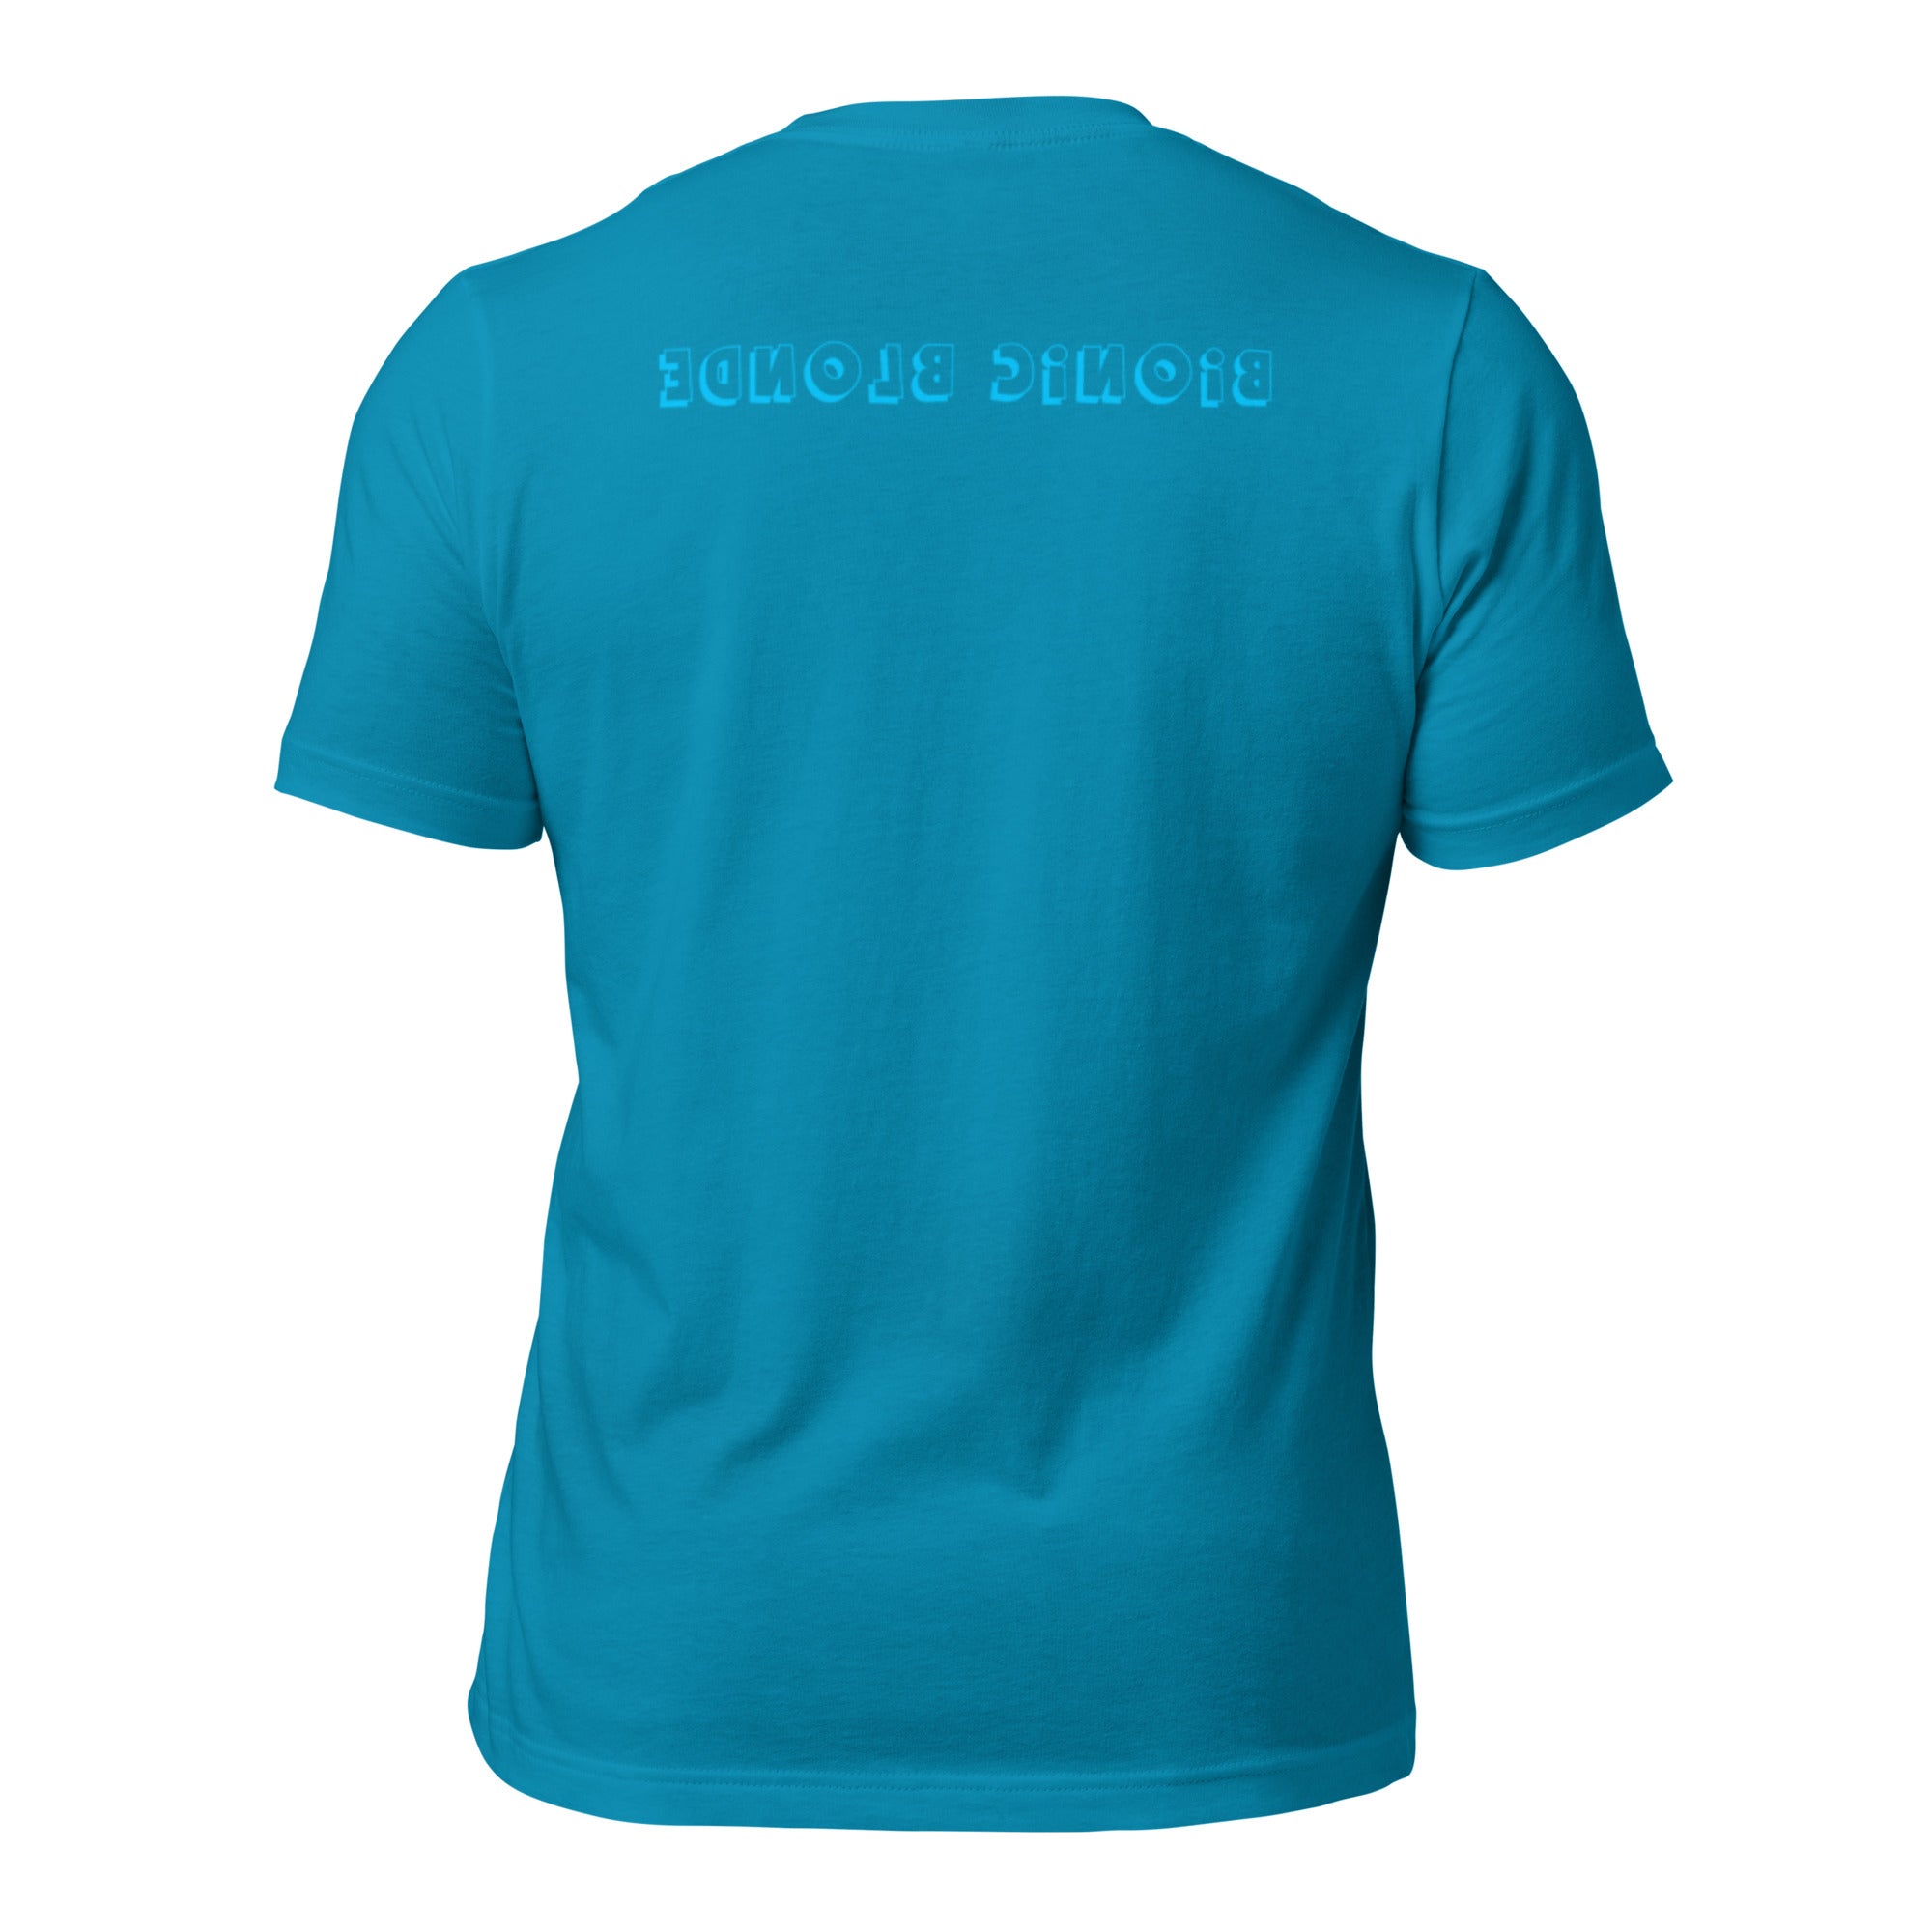 Unisex Crew Neck T-Shirt - Bionic Blonde - GRAPHIC T-SHIRTS